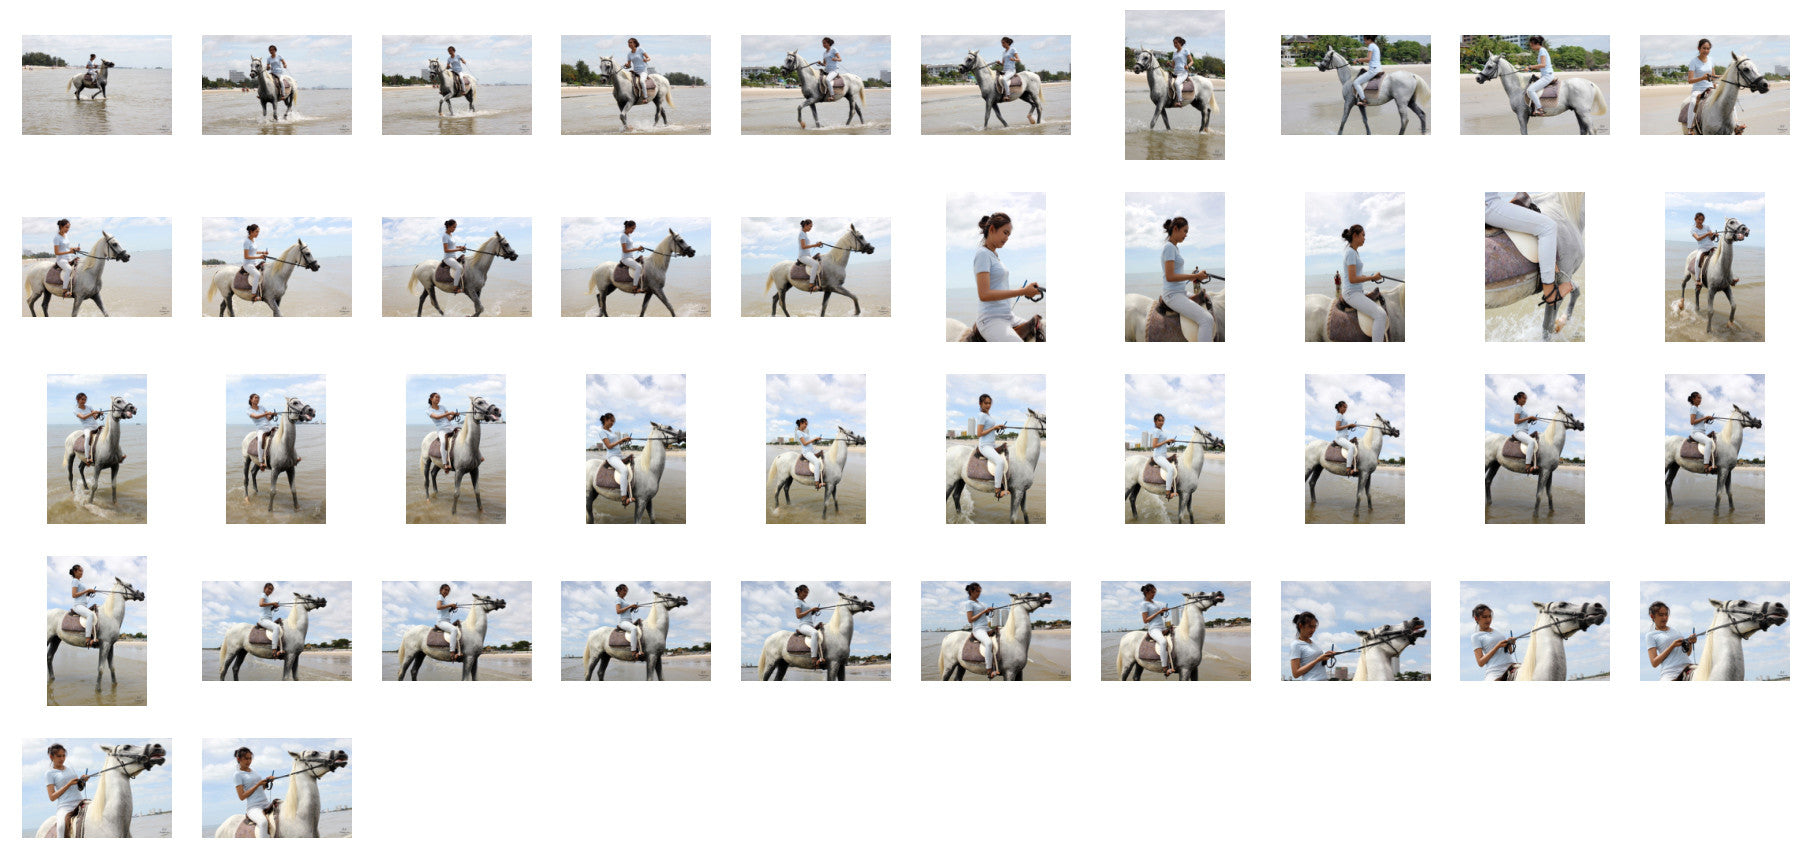 Som in Jodhpurs Riding with Saddle on White Arabian Horse, Part 3 - Riding.Vision